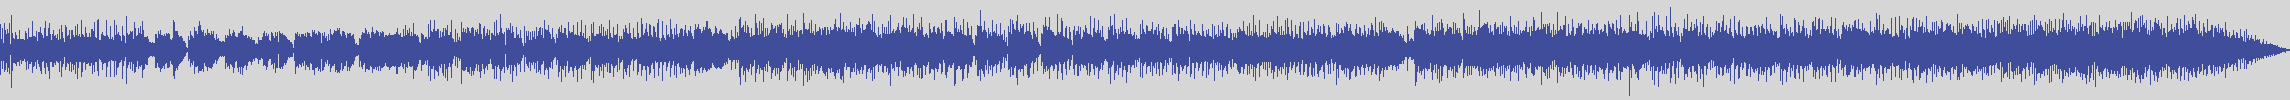 digiphonic_records [DPR013] Little Tony - Azzurra [Original Mix] audio wave form